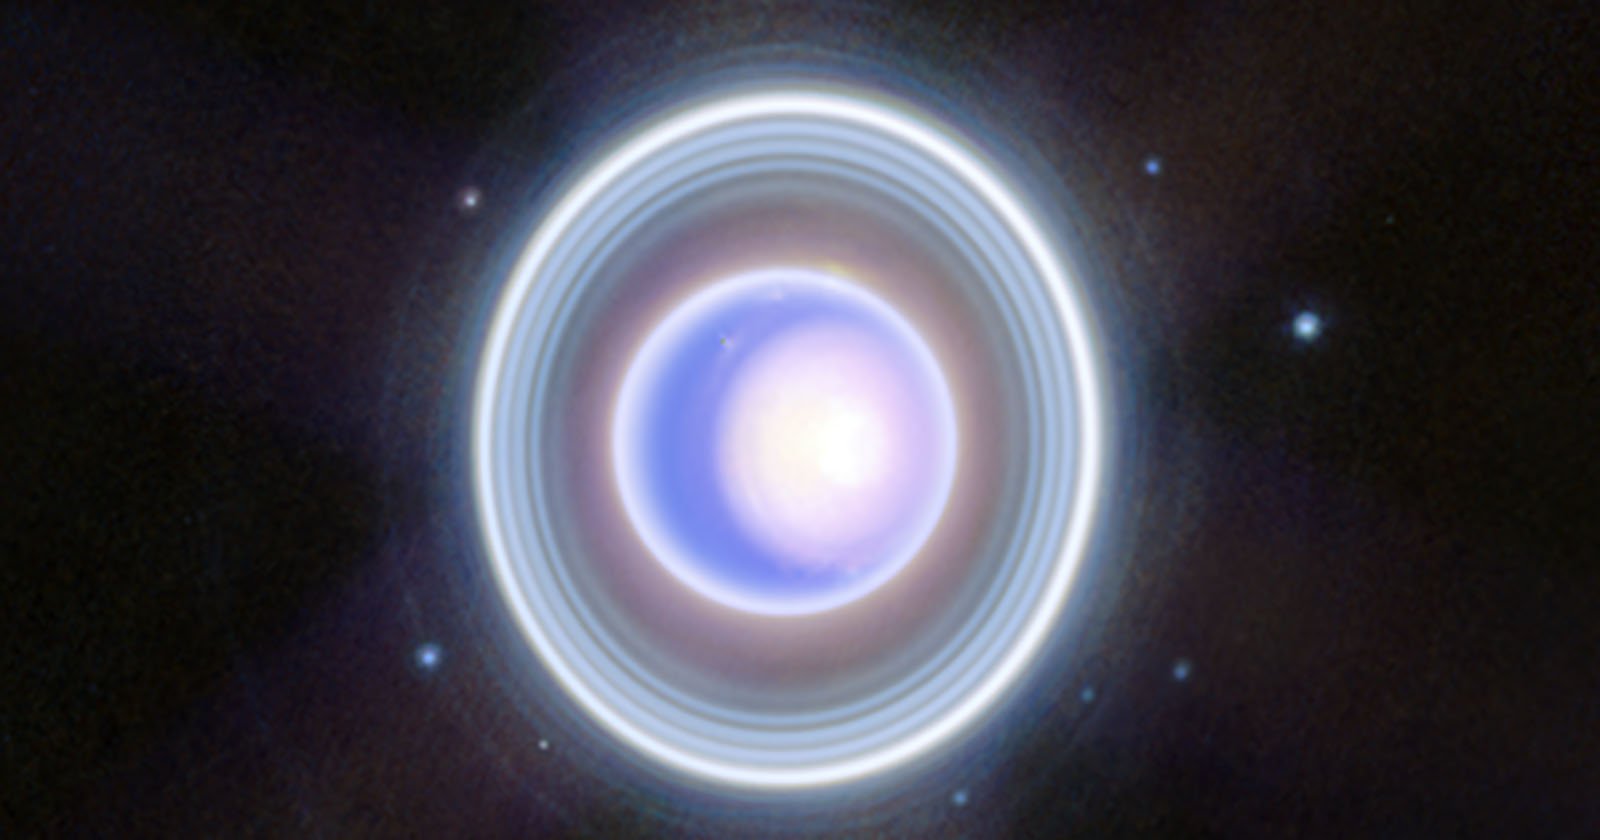 Uranus Rings and Moons Dazzle in New Webb Image